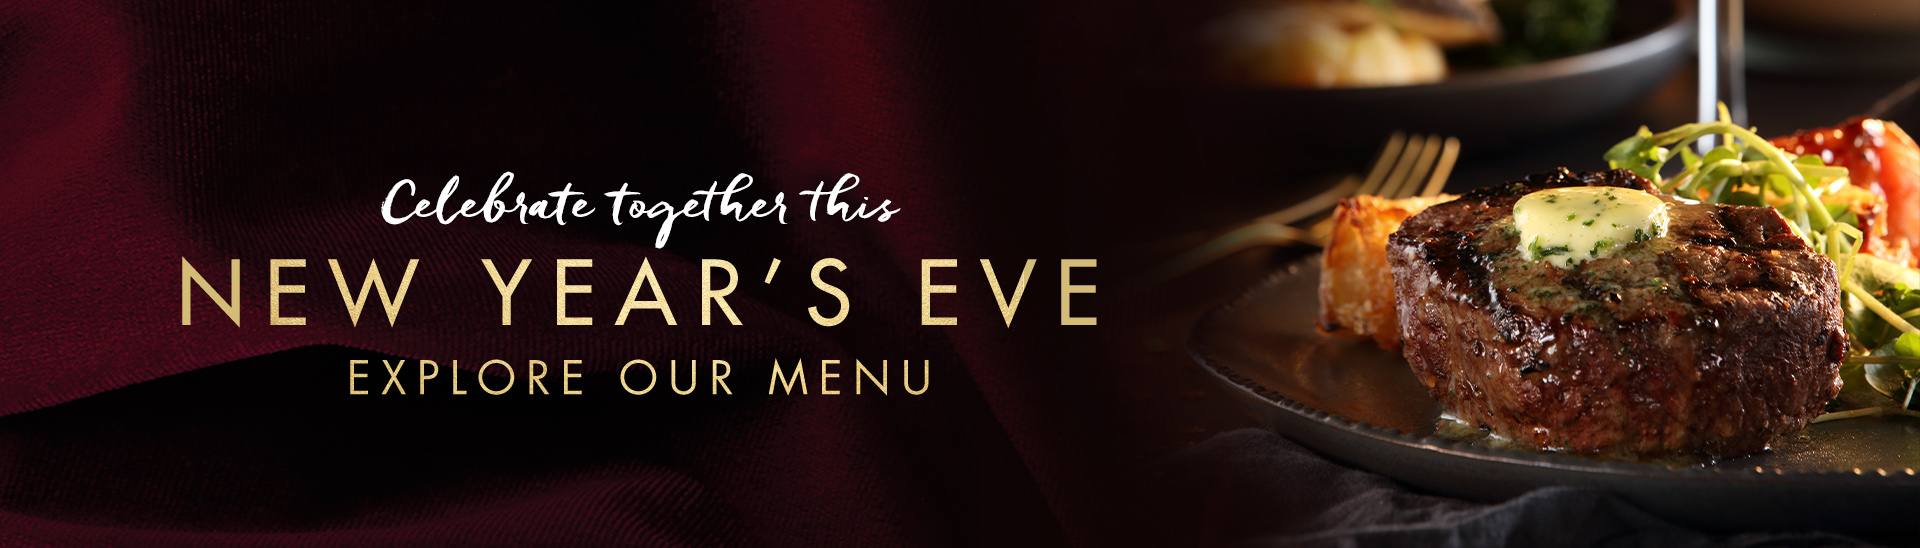 New Year’s eve menu at Miller & Carter Resorts World 